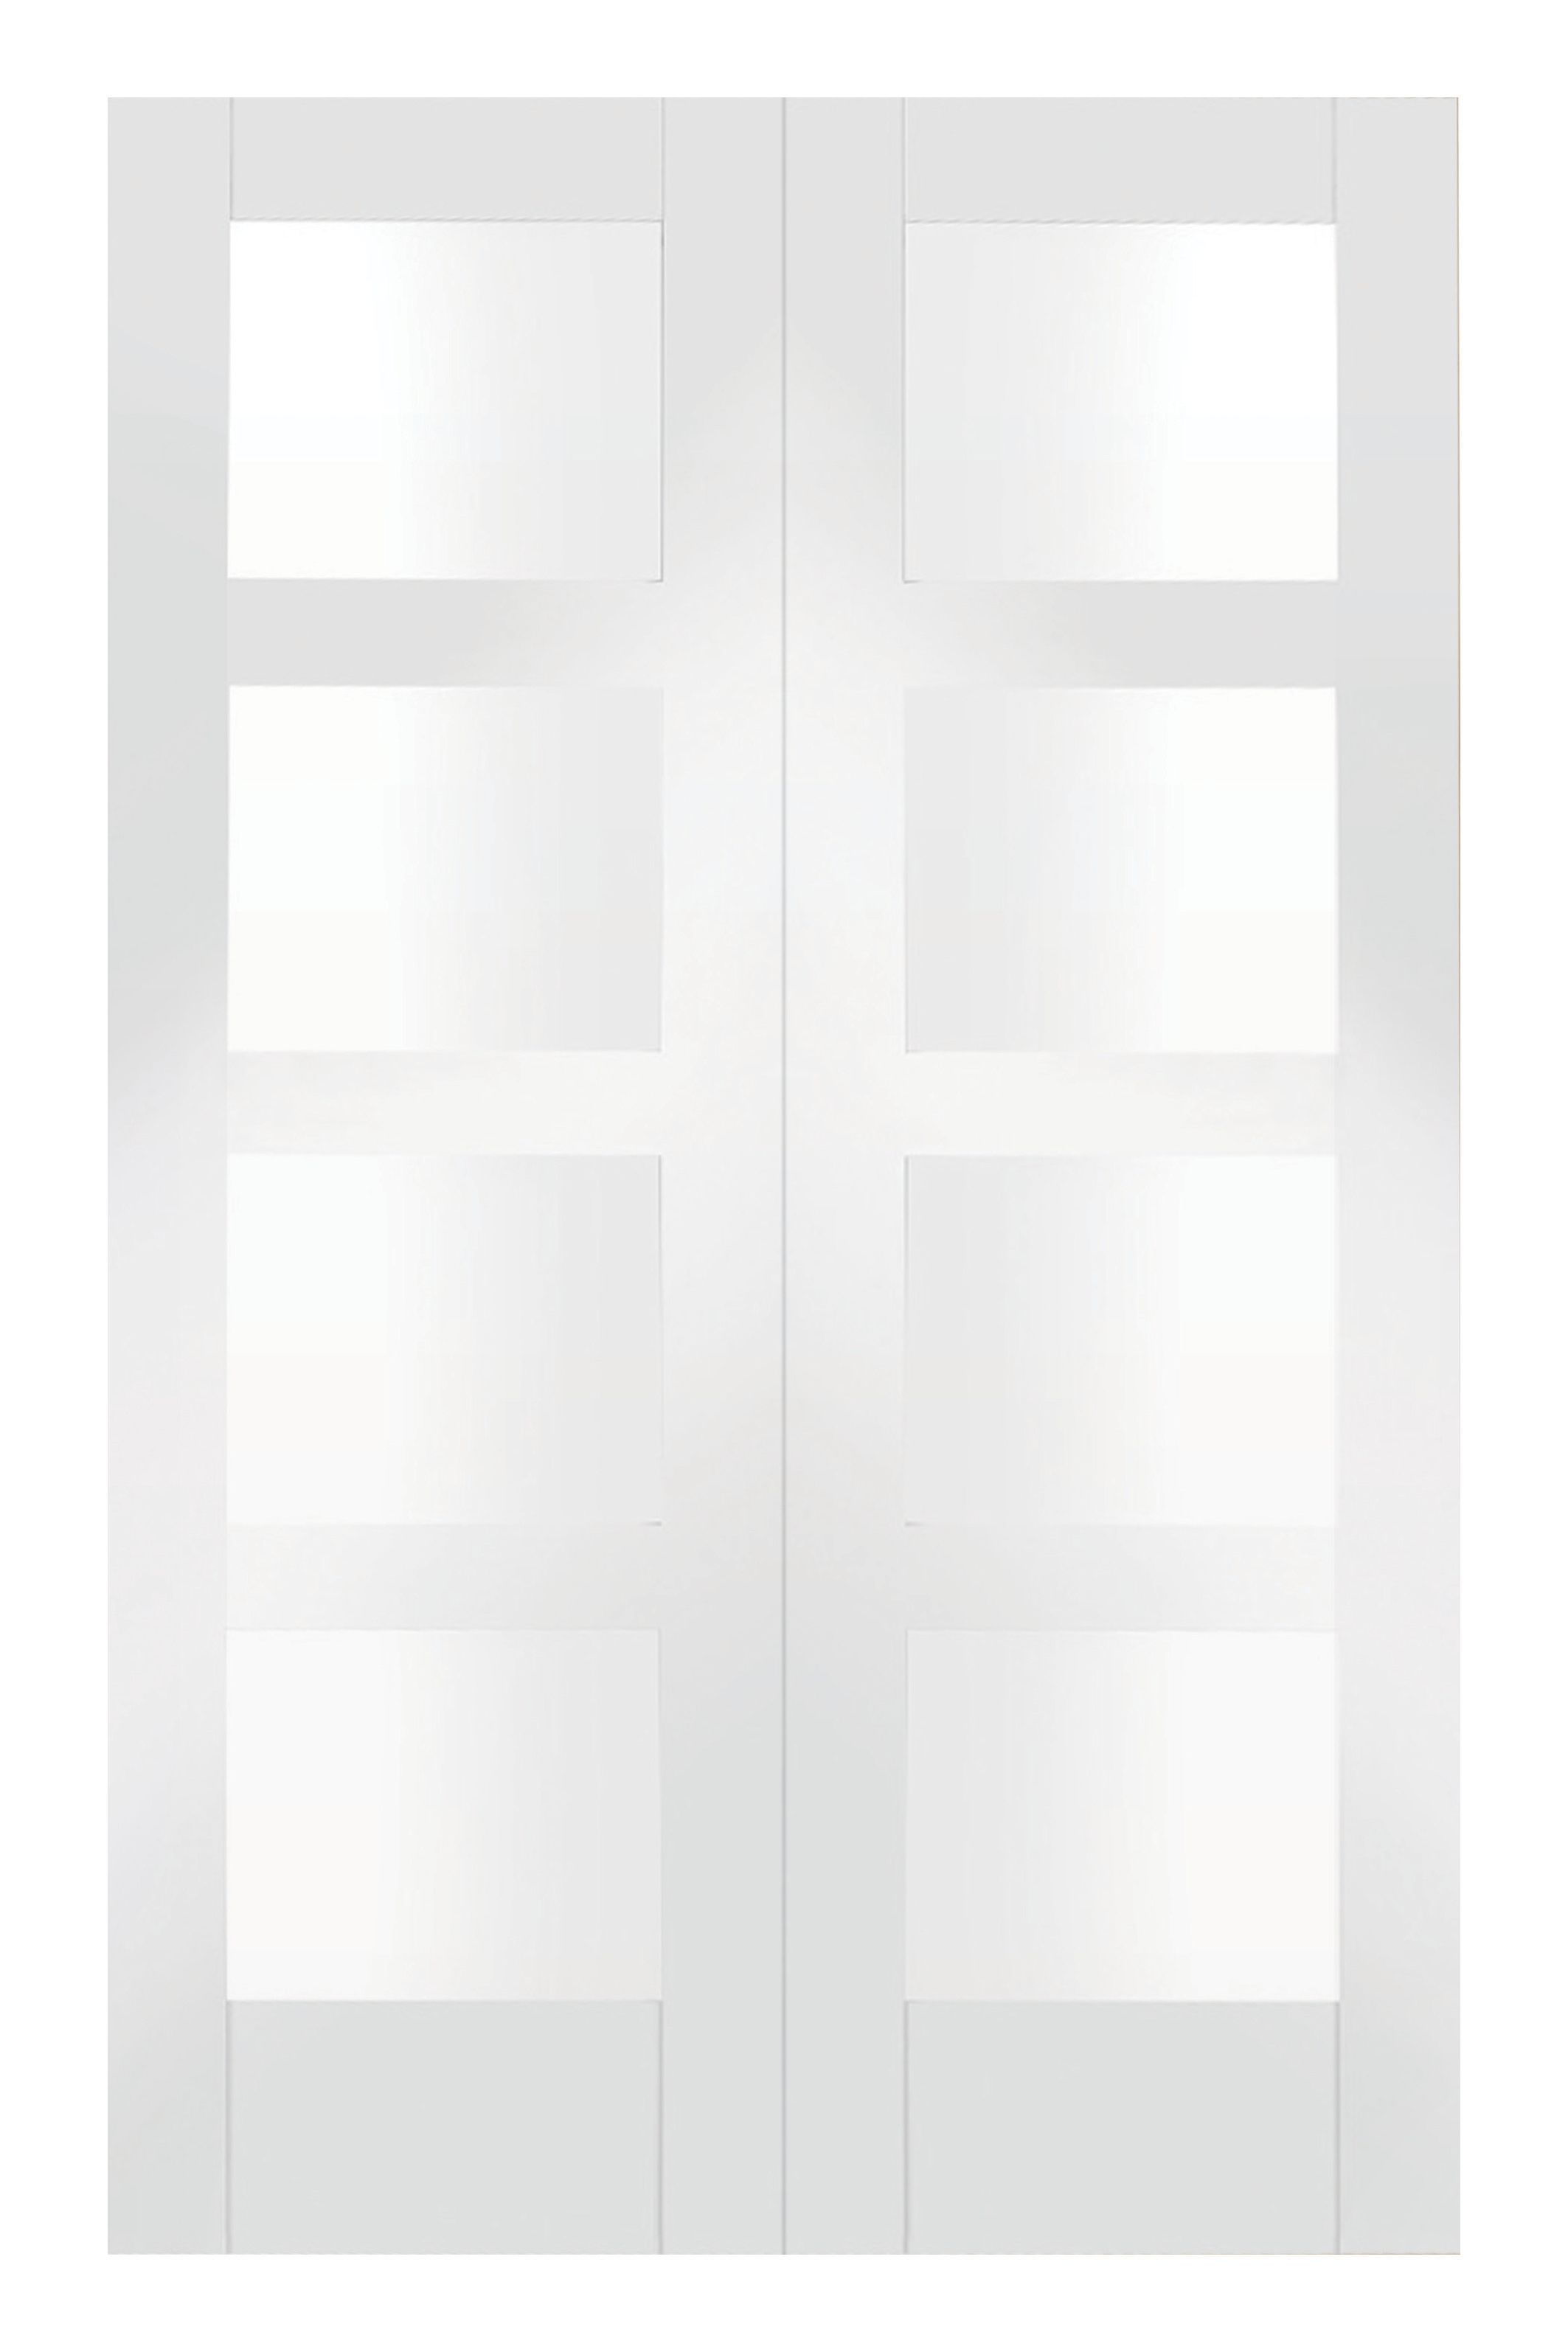 Image of Wickes Barton White Fully Glazed MDF 4 Panel Rebated Internal Door Pair - 1981 x 1220mm